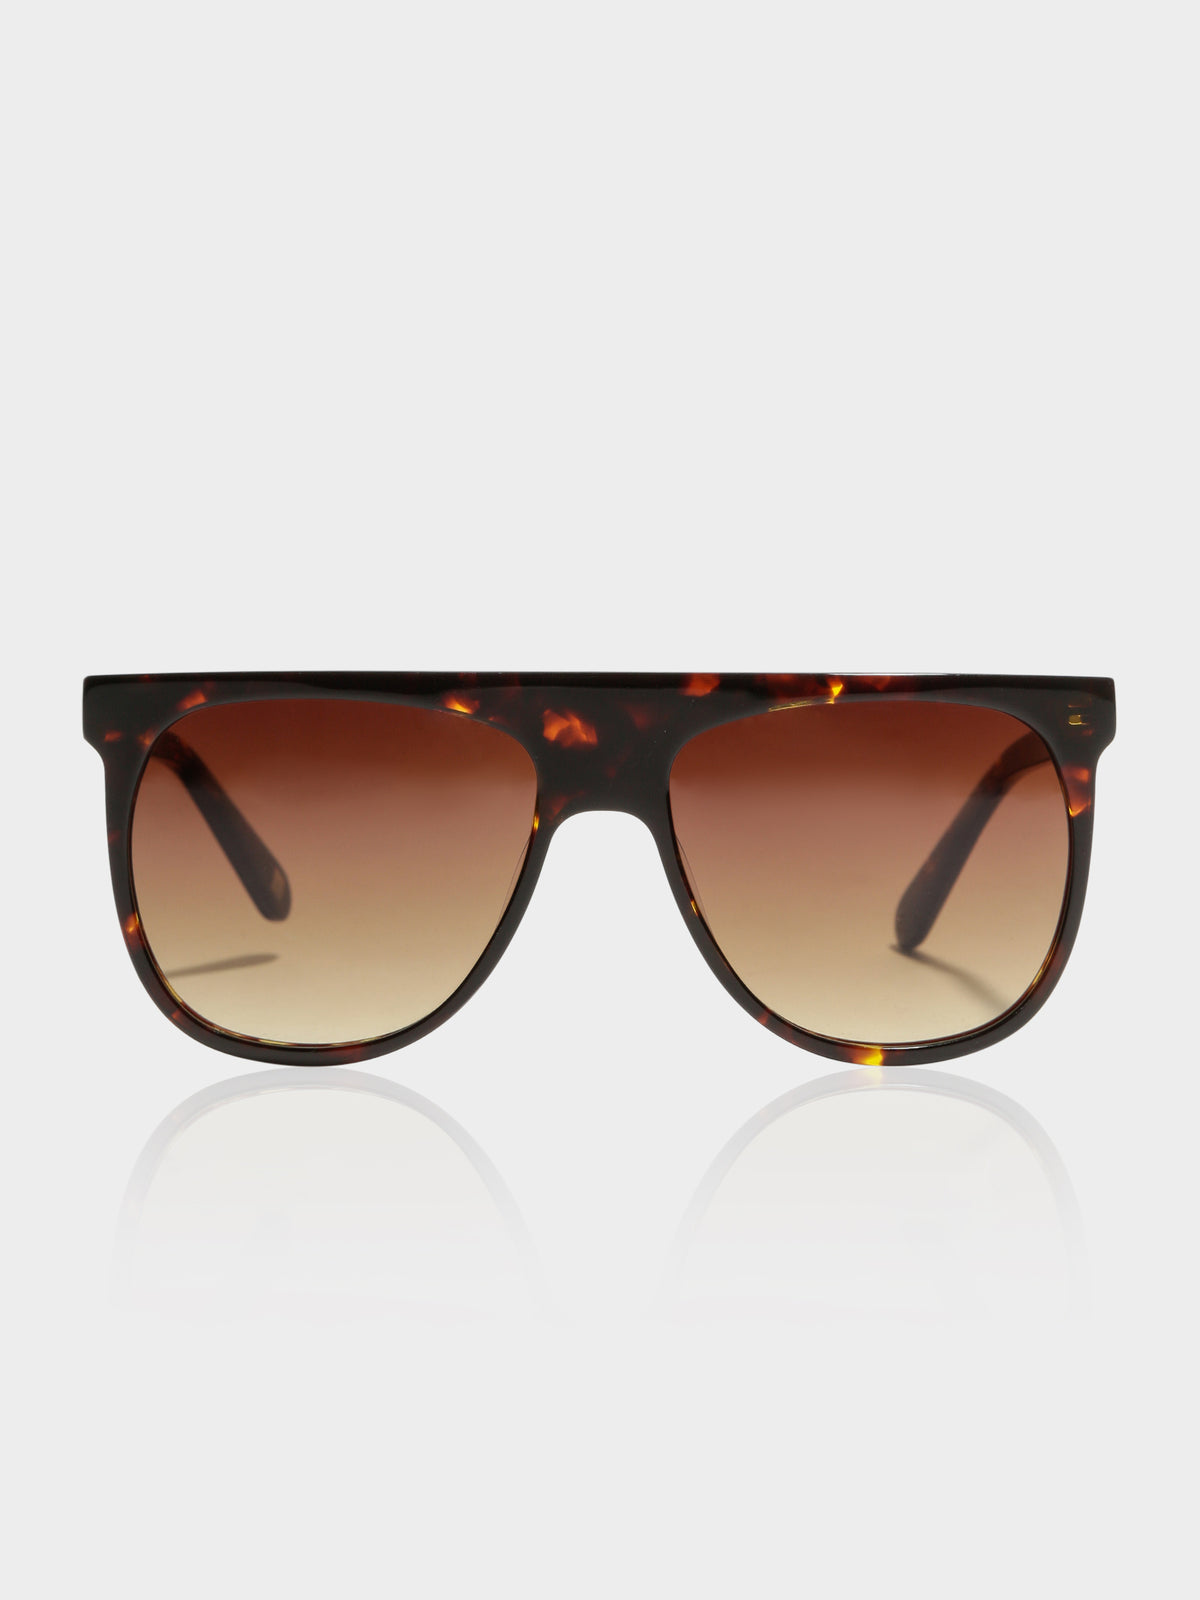 Polo Sunglasses in Tortoise Shell